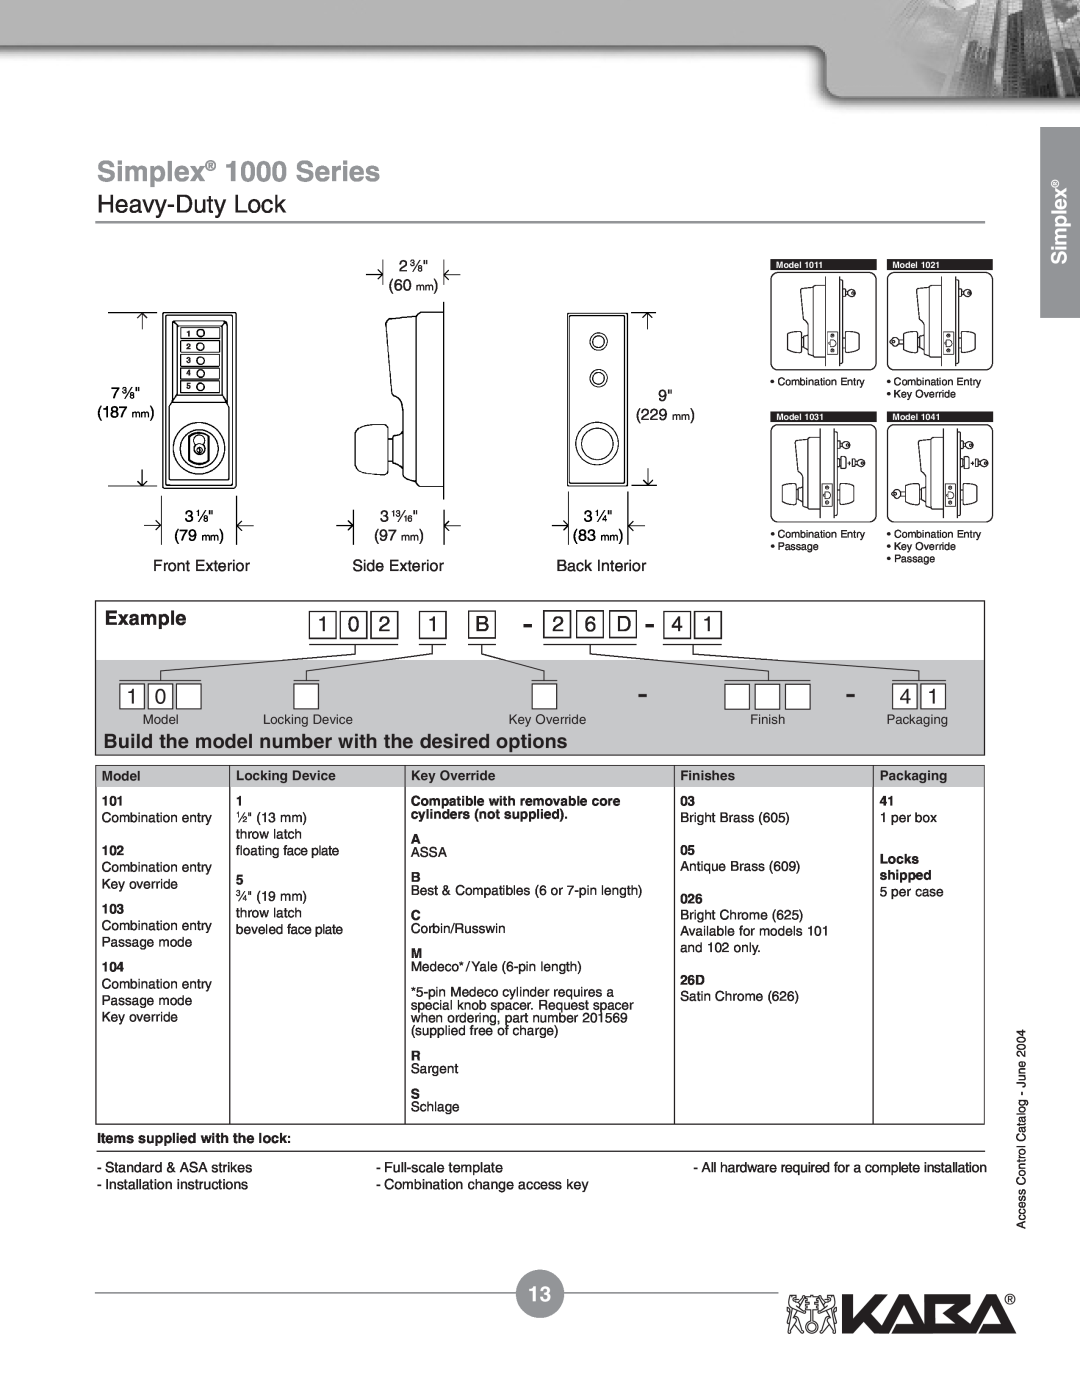 Assa Mechanical Pushbutton Locks manual B - 2 6 D, Simplex 1000 Series, Heavy-Duty Lock, Example, 229 mm 